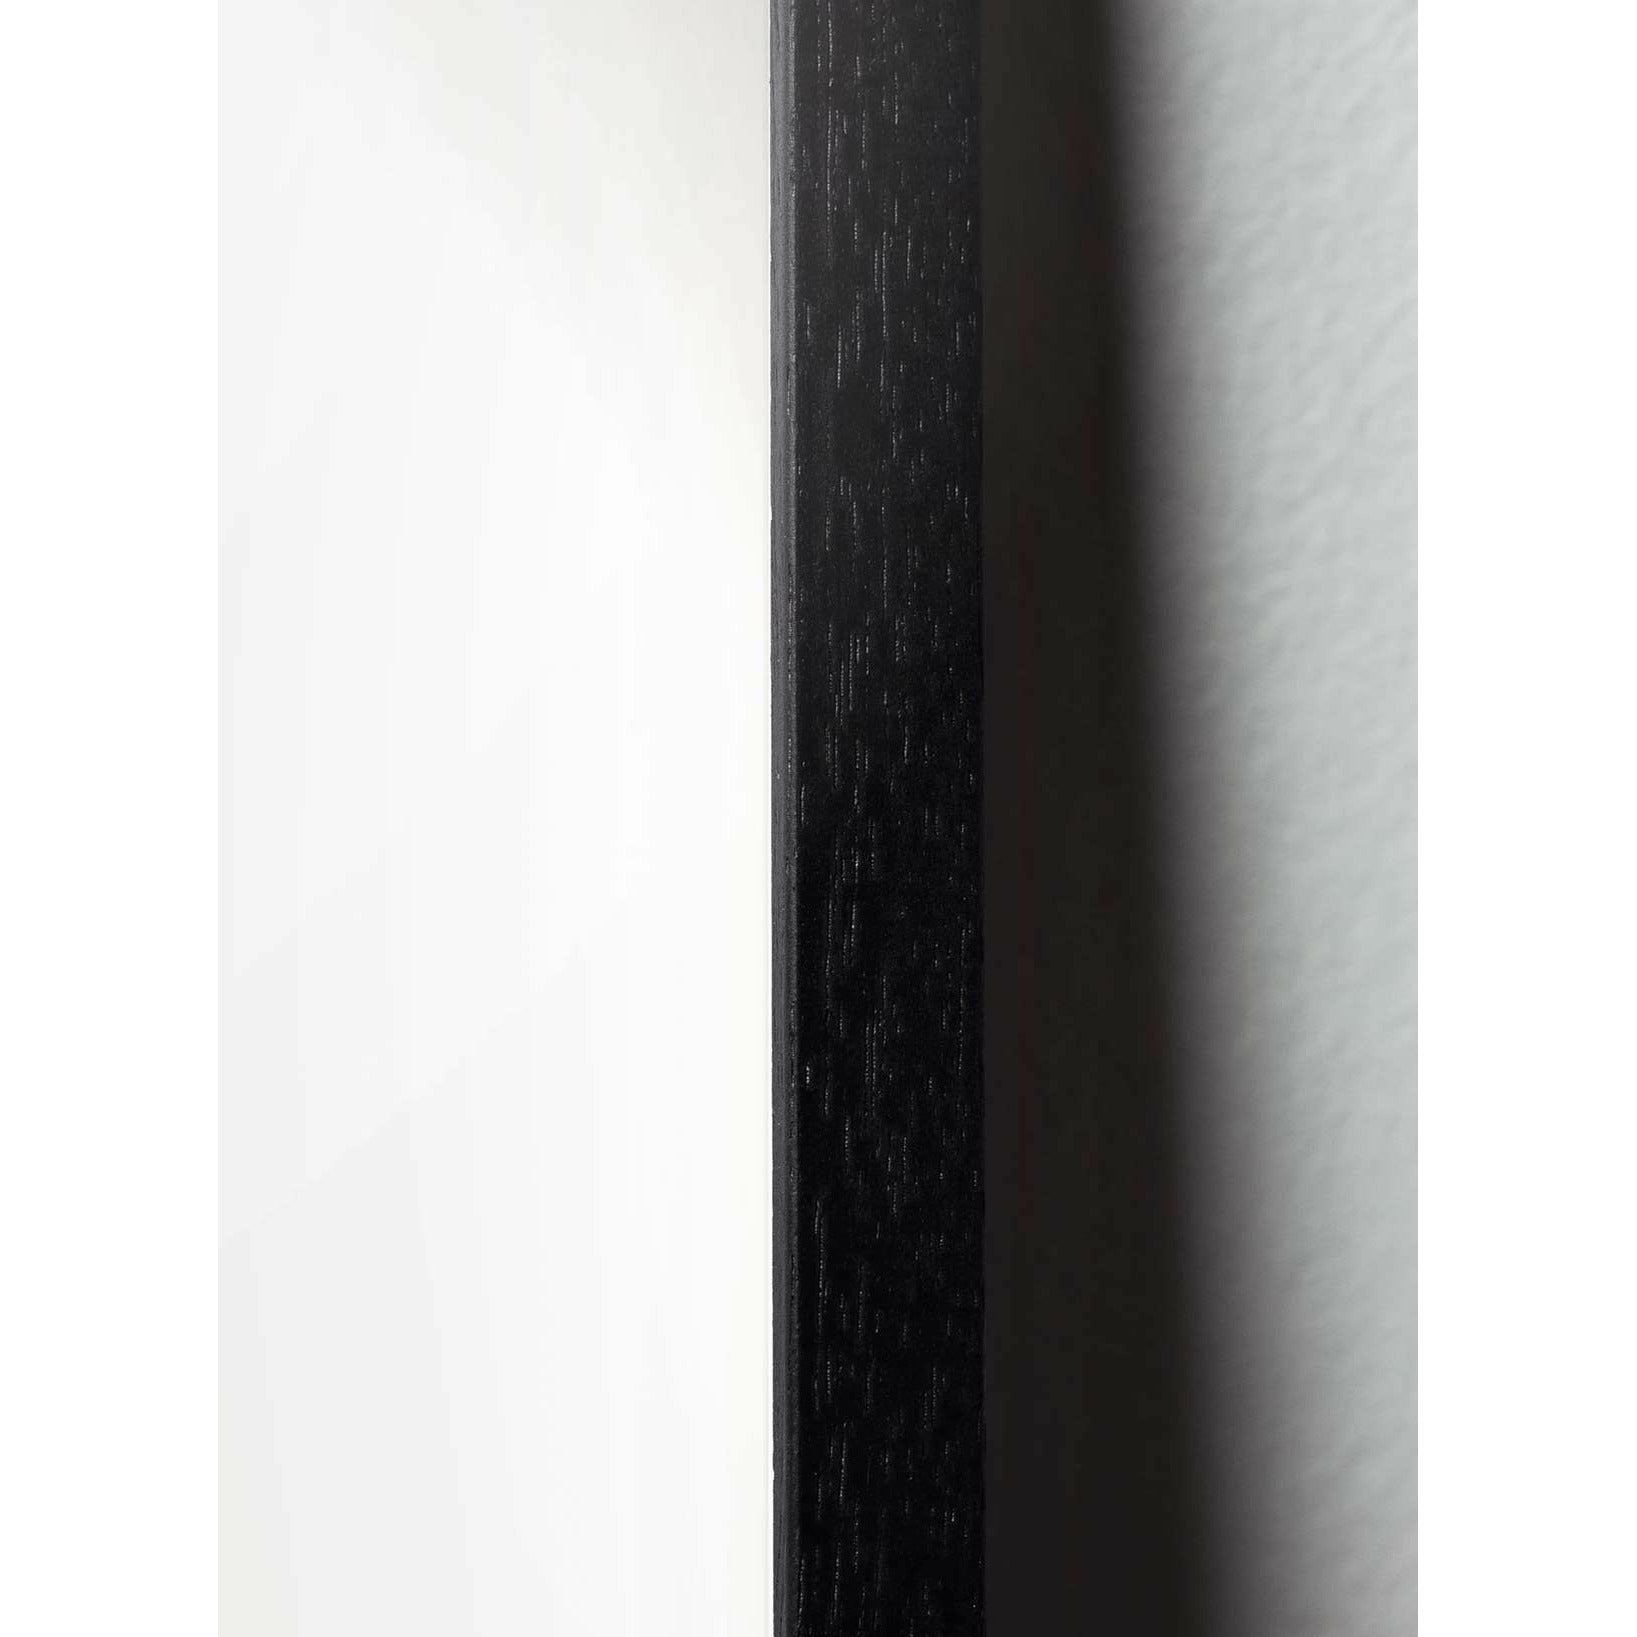 Póster clásico de cono de pino de creación, marco en madera lacada negra de 30x40 cm, fondo rojo